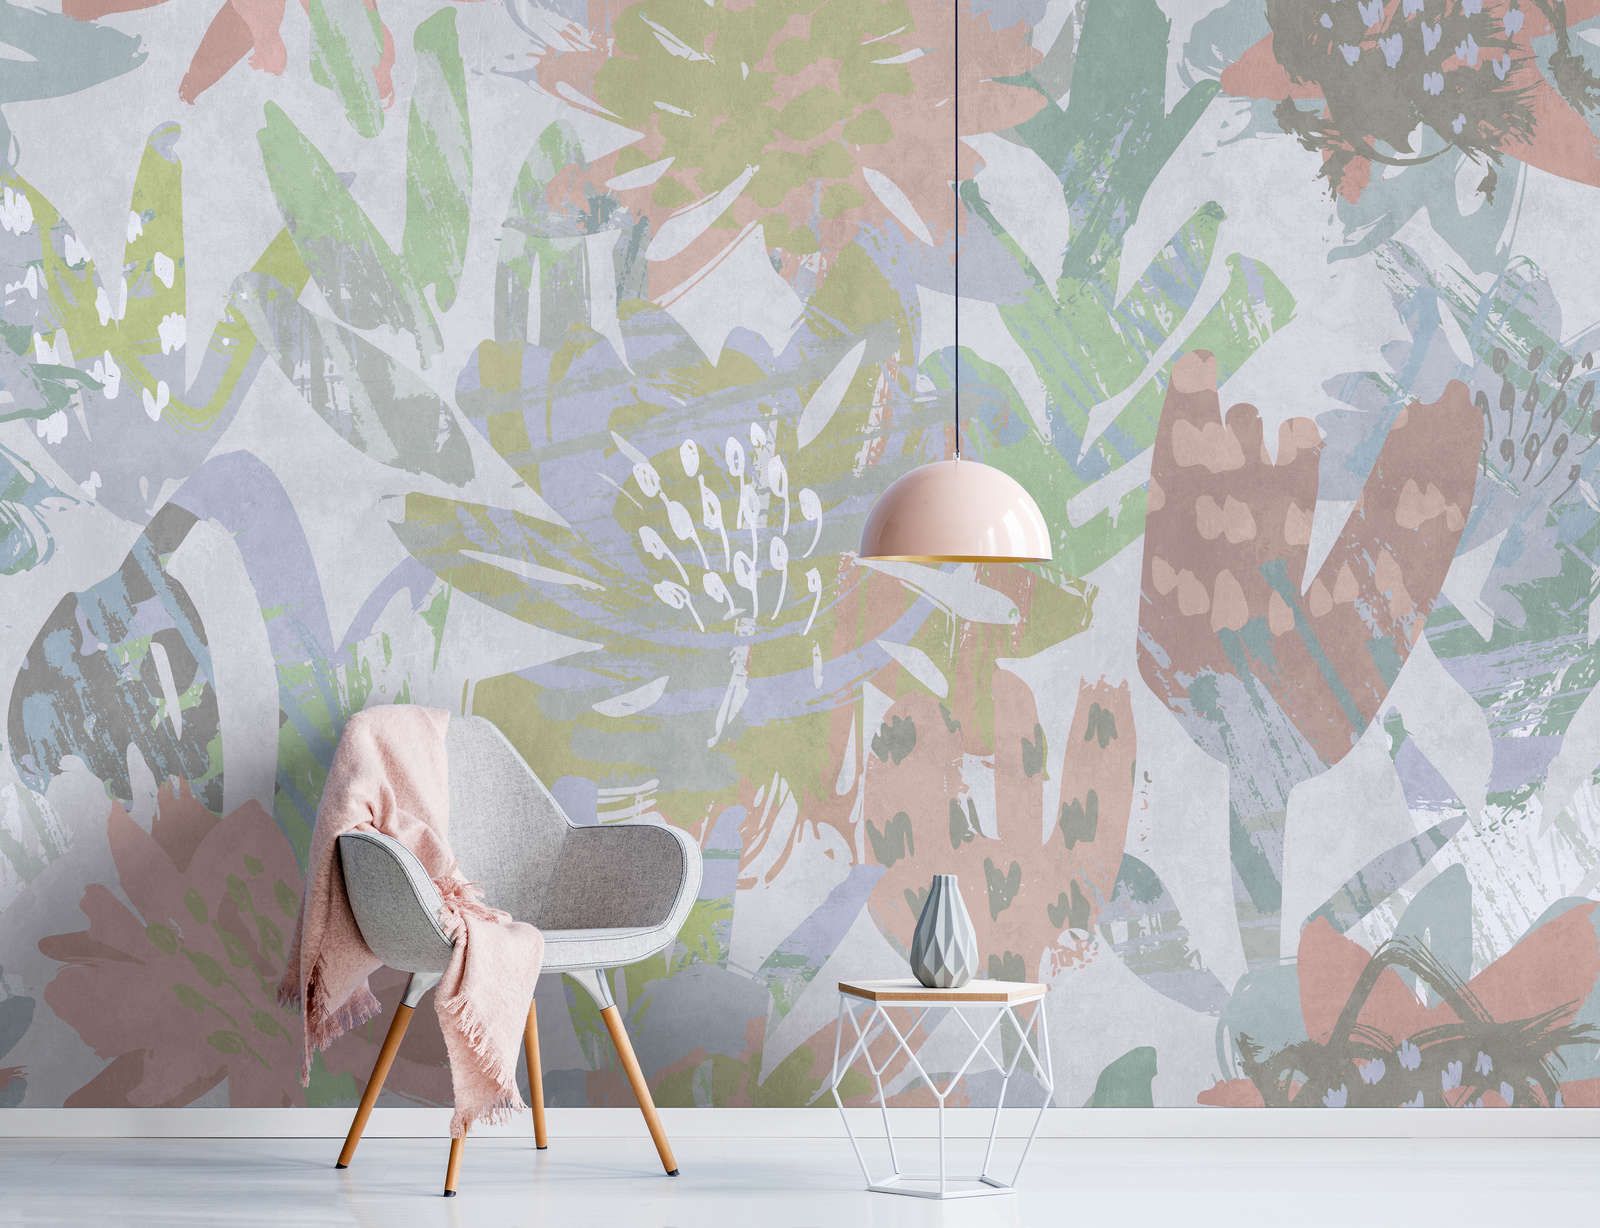             Digital behang »sophia« - Bont bloemenpatroon op betonnen pleisterstructuur - Glad, licht parelend vlies
        